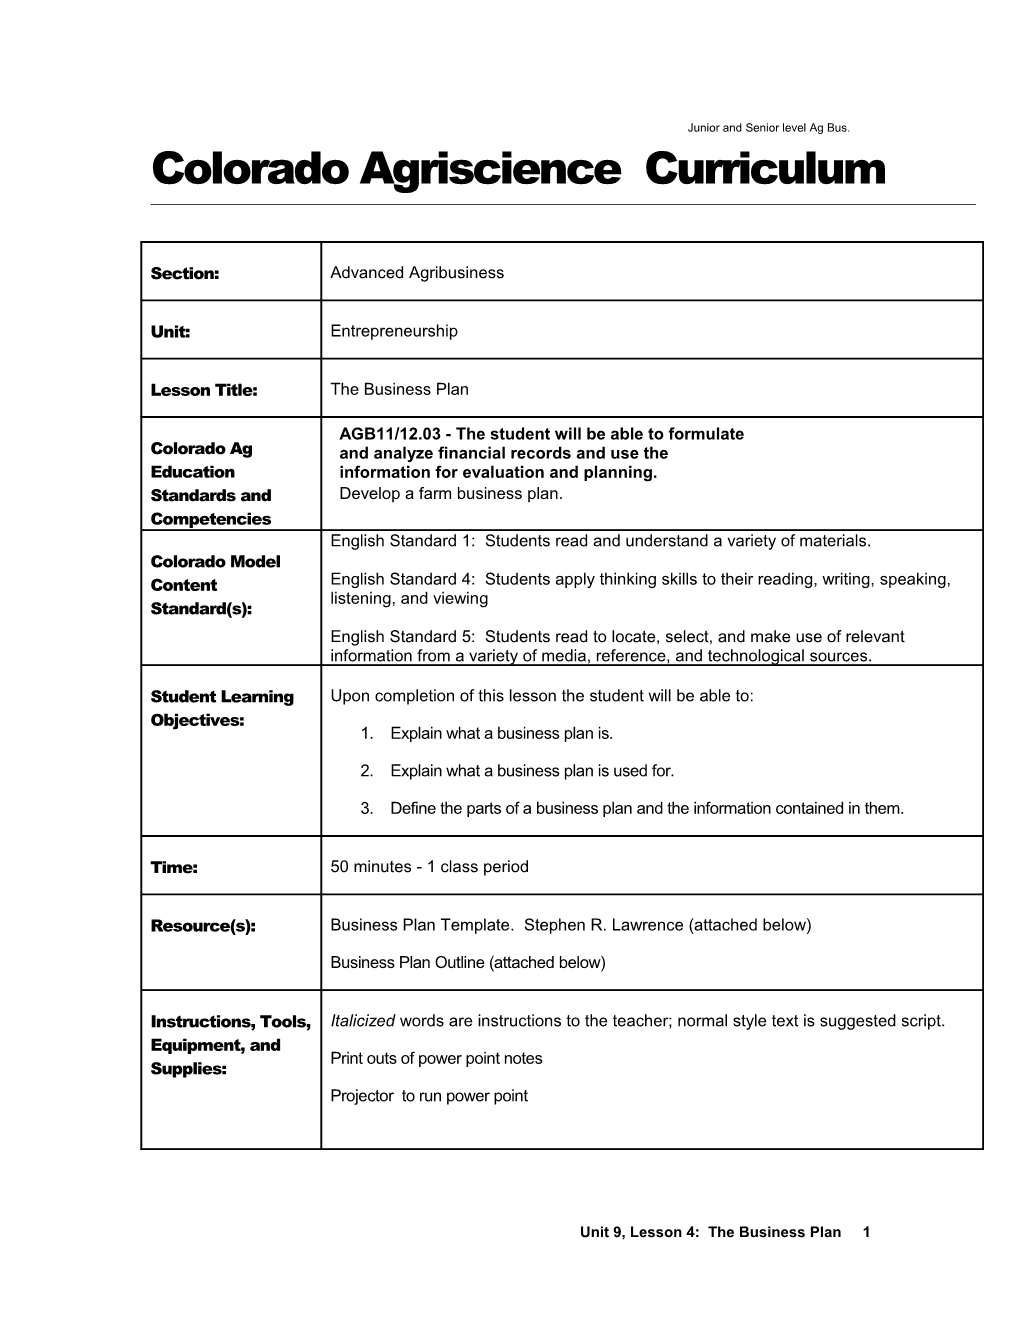 Colorado Agriscience Curriculum s1